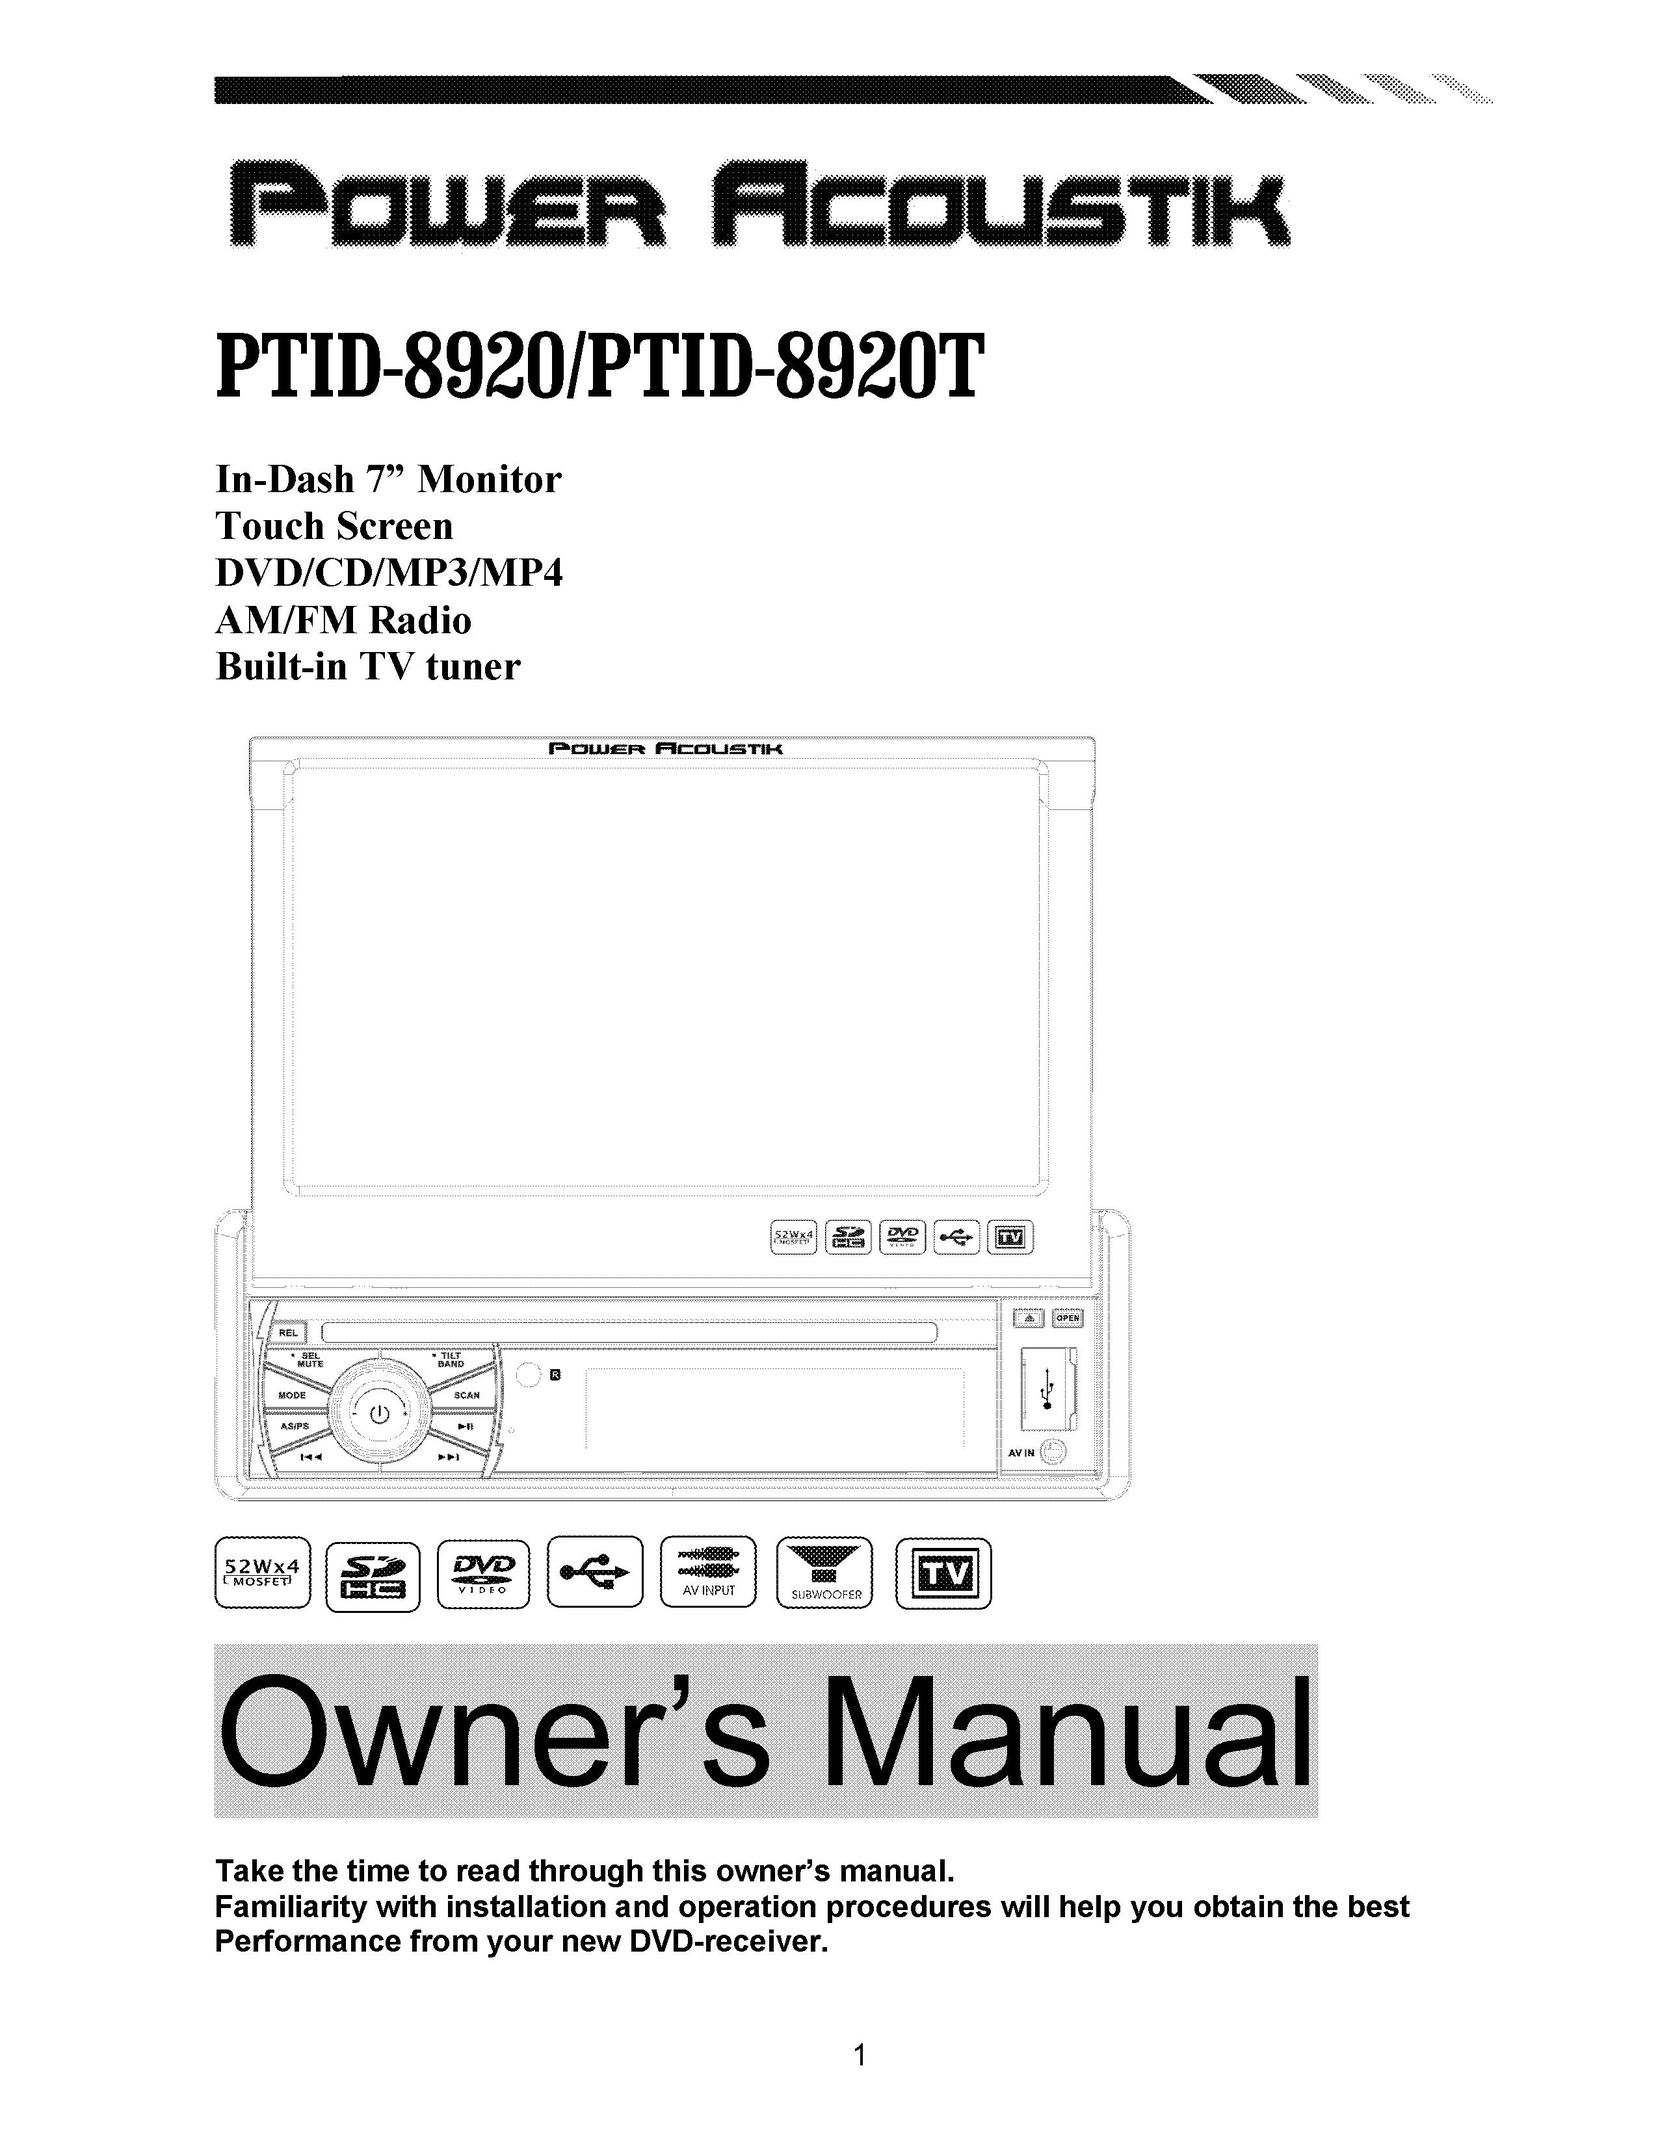 Power Acoustik power acoustik Car Video System User Manual